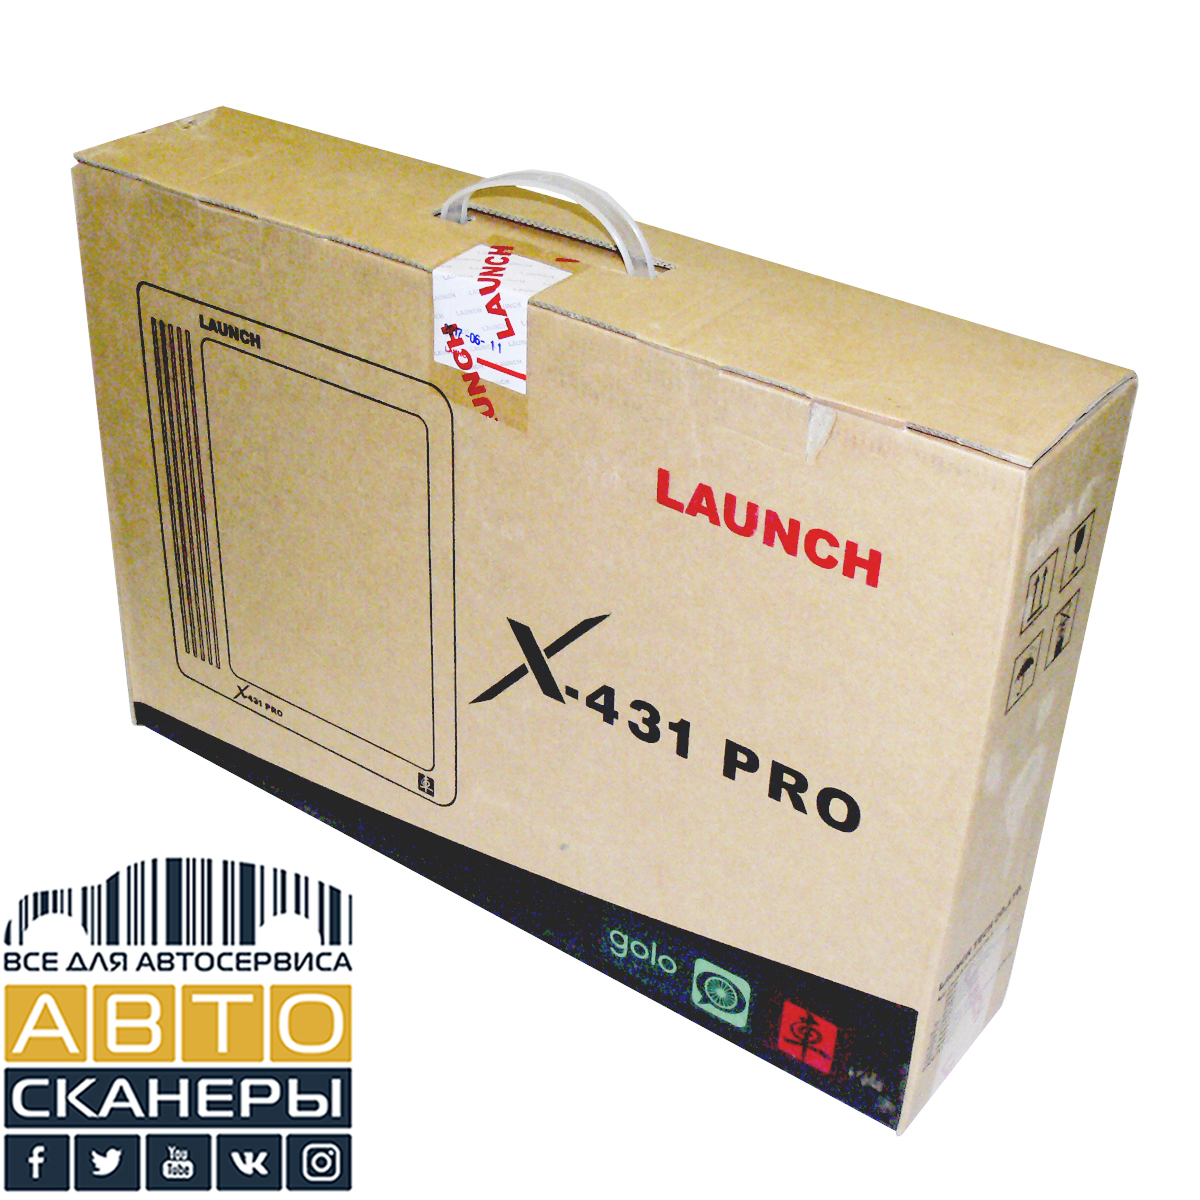 Launch X431 PRO в коробке